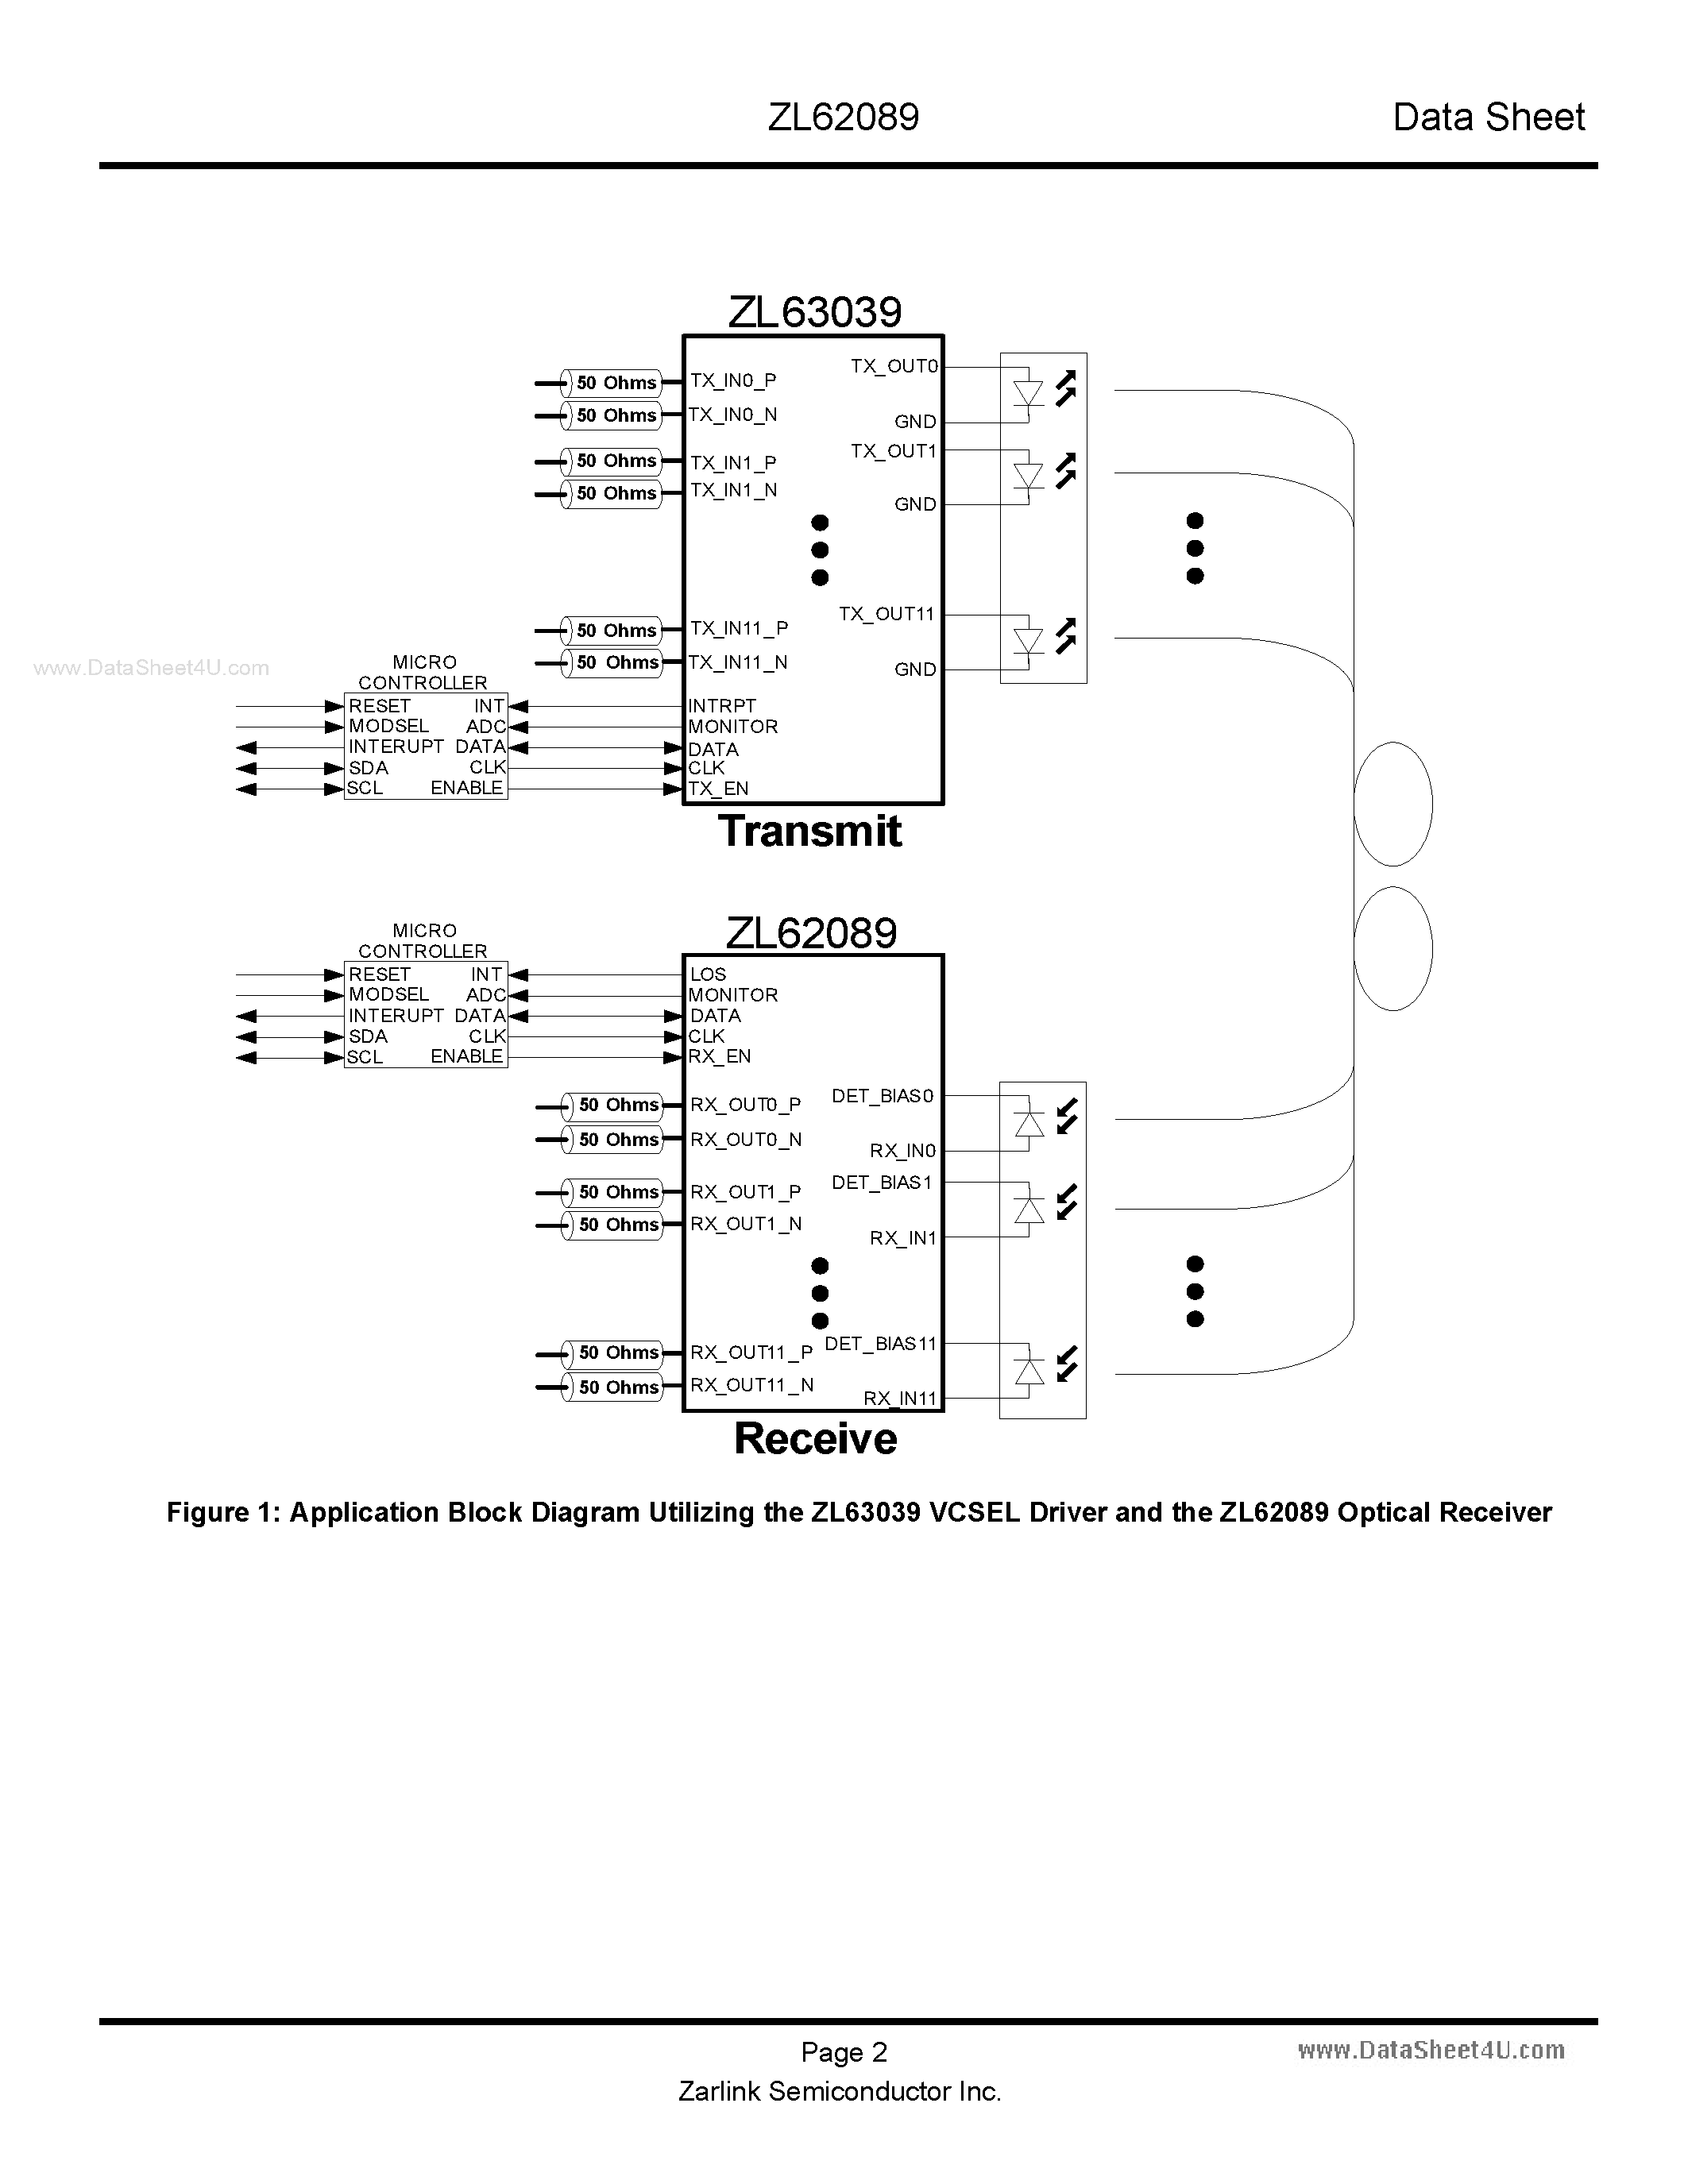 Datasheet ZL62089 - 2x6.25 Gb/s TIA/LA Receiver page 2